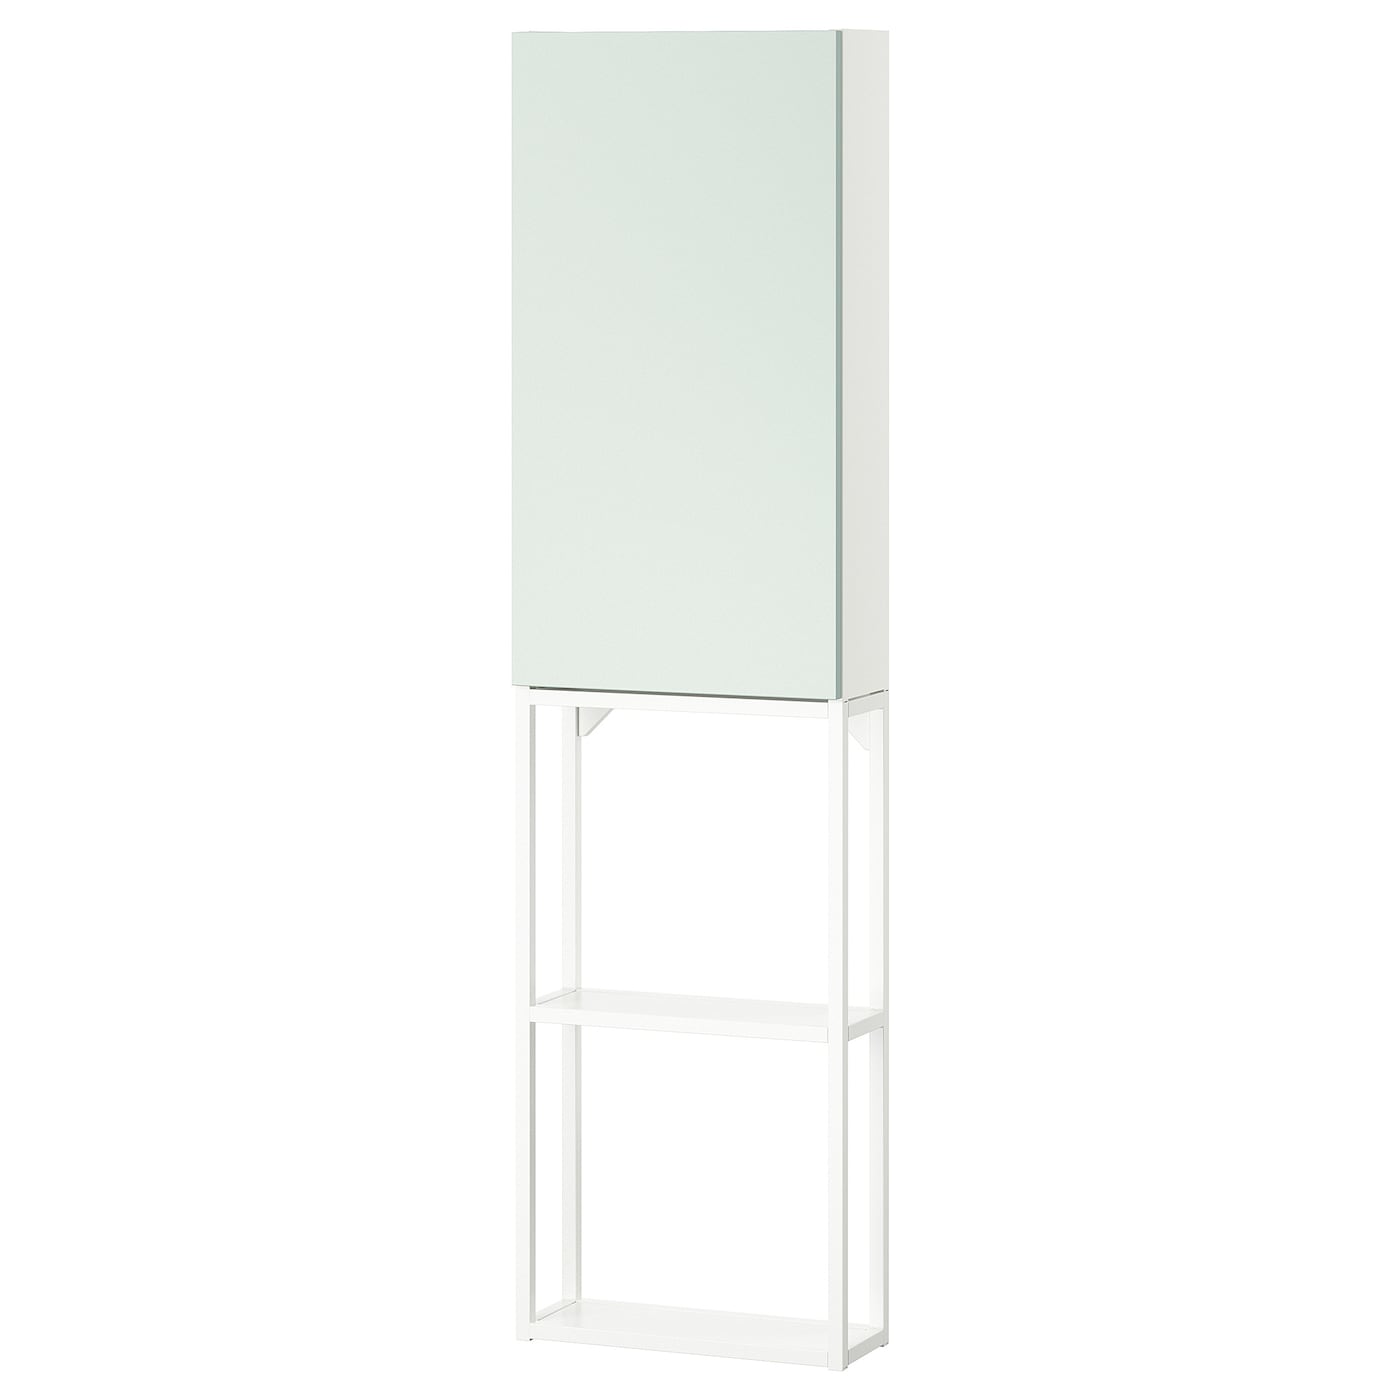 Книжный шкаф -  ENHET IKEA/ ЭНХЕТ ИКЕА, 150х40 см, белый/зеленый